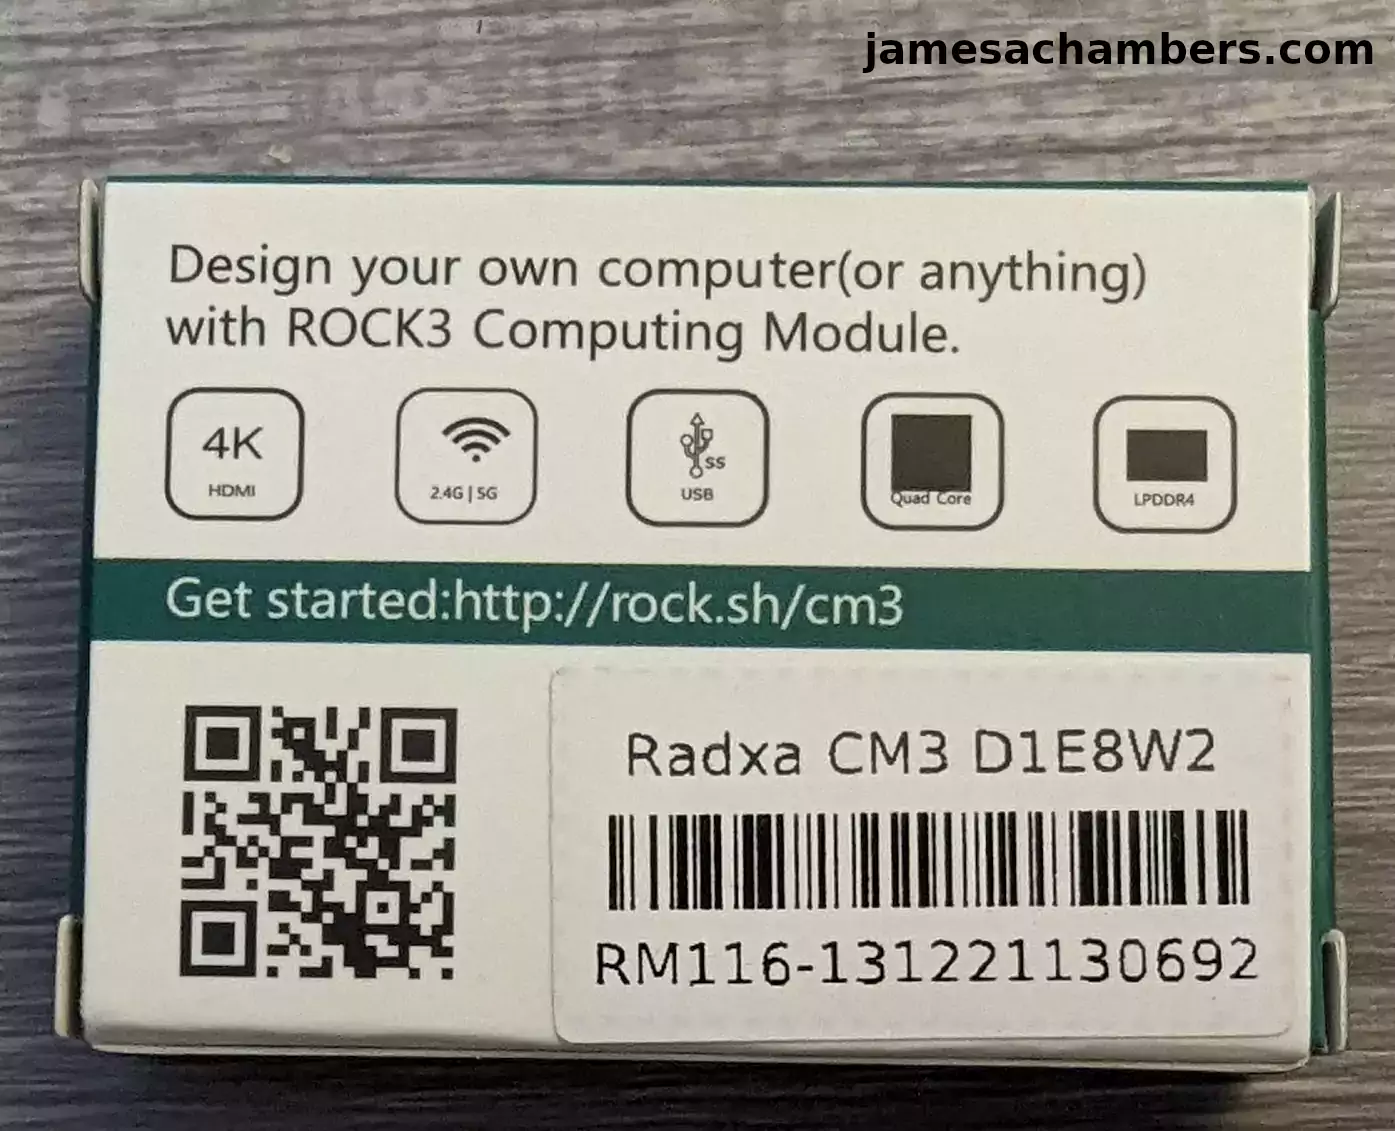 Radxa CM3 - Packaging (Back)